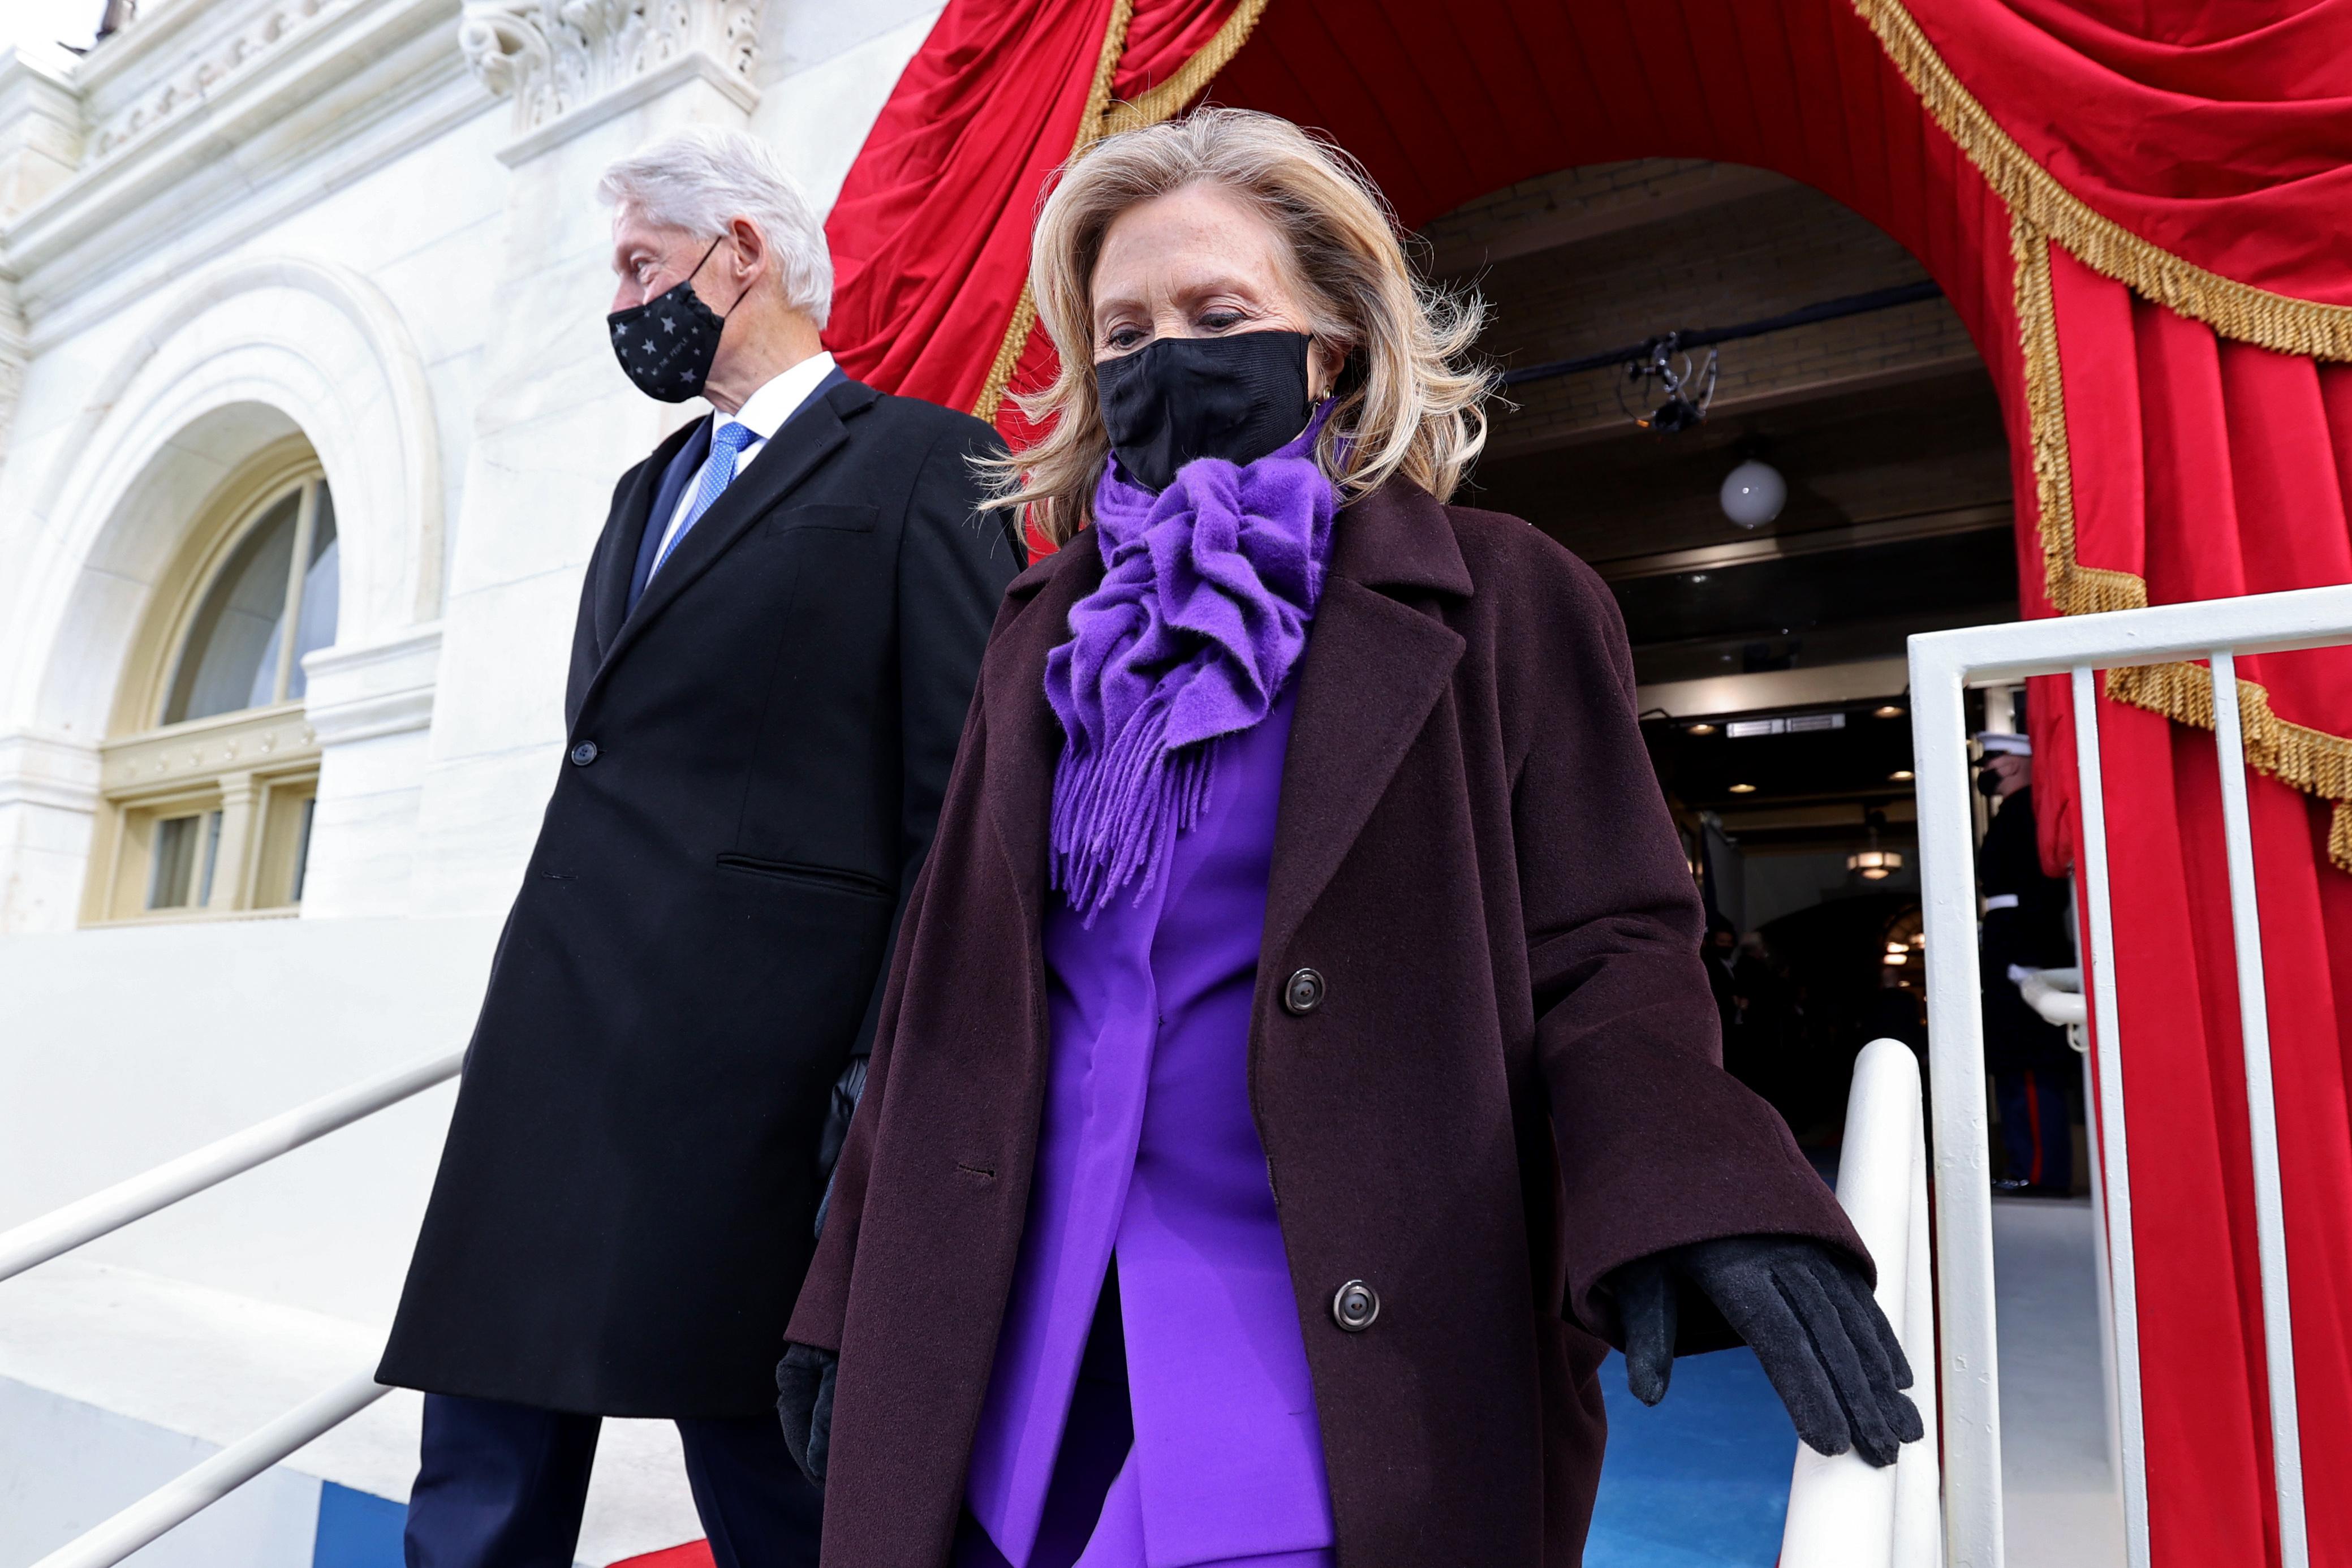 Bill and Hillary Clinton arrive. Hillary is wearing a purple pantsuit under a dark purple coat.